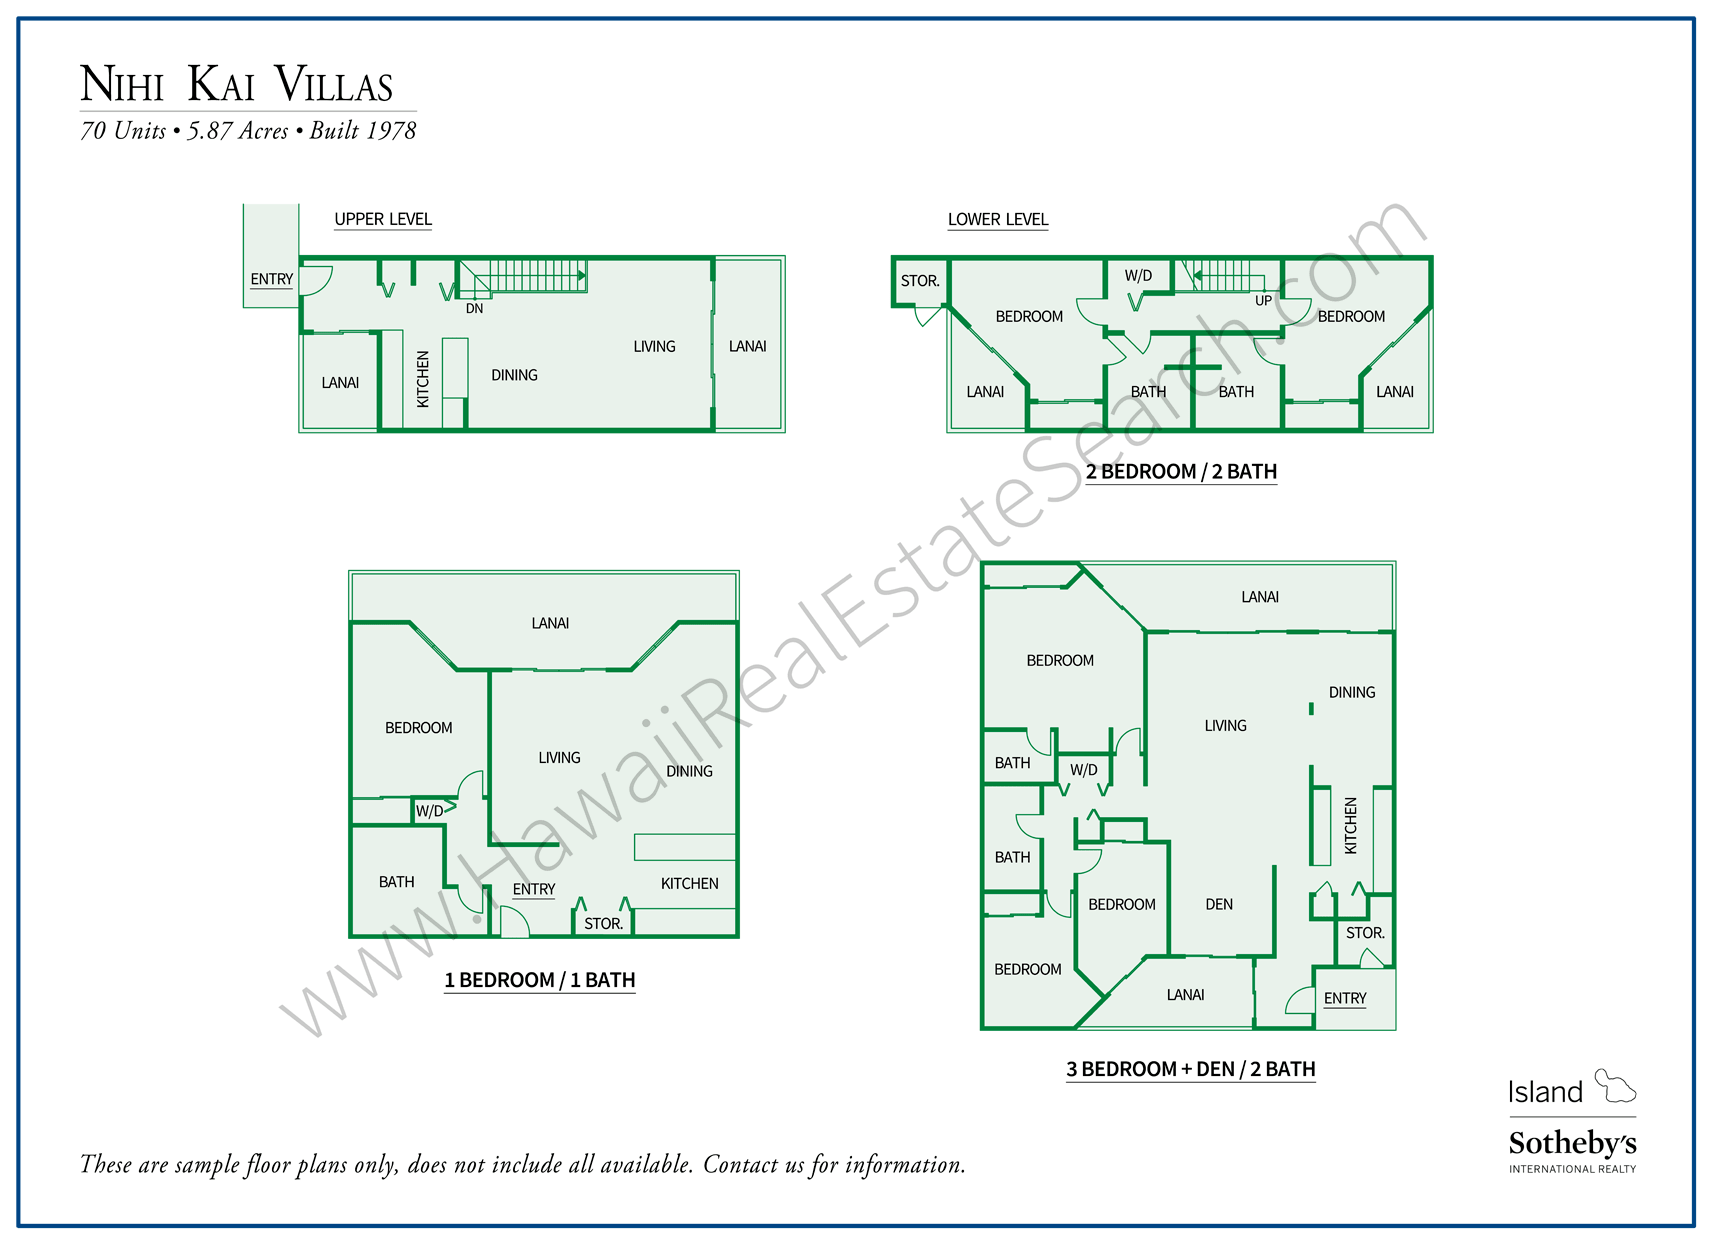 Nihi Kai Villas Floor Plans Updated